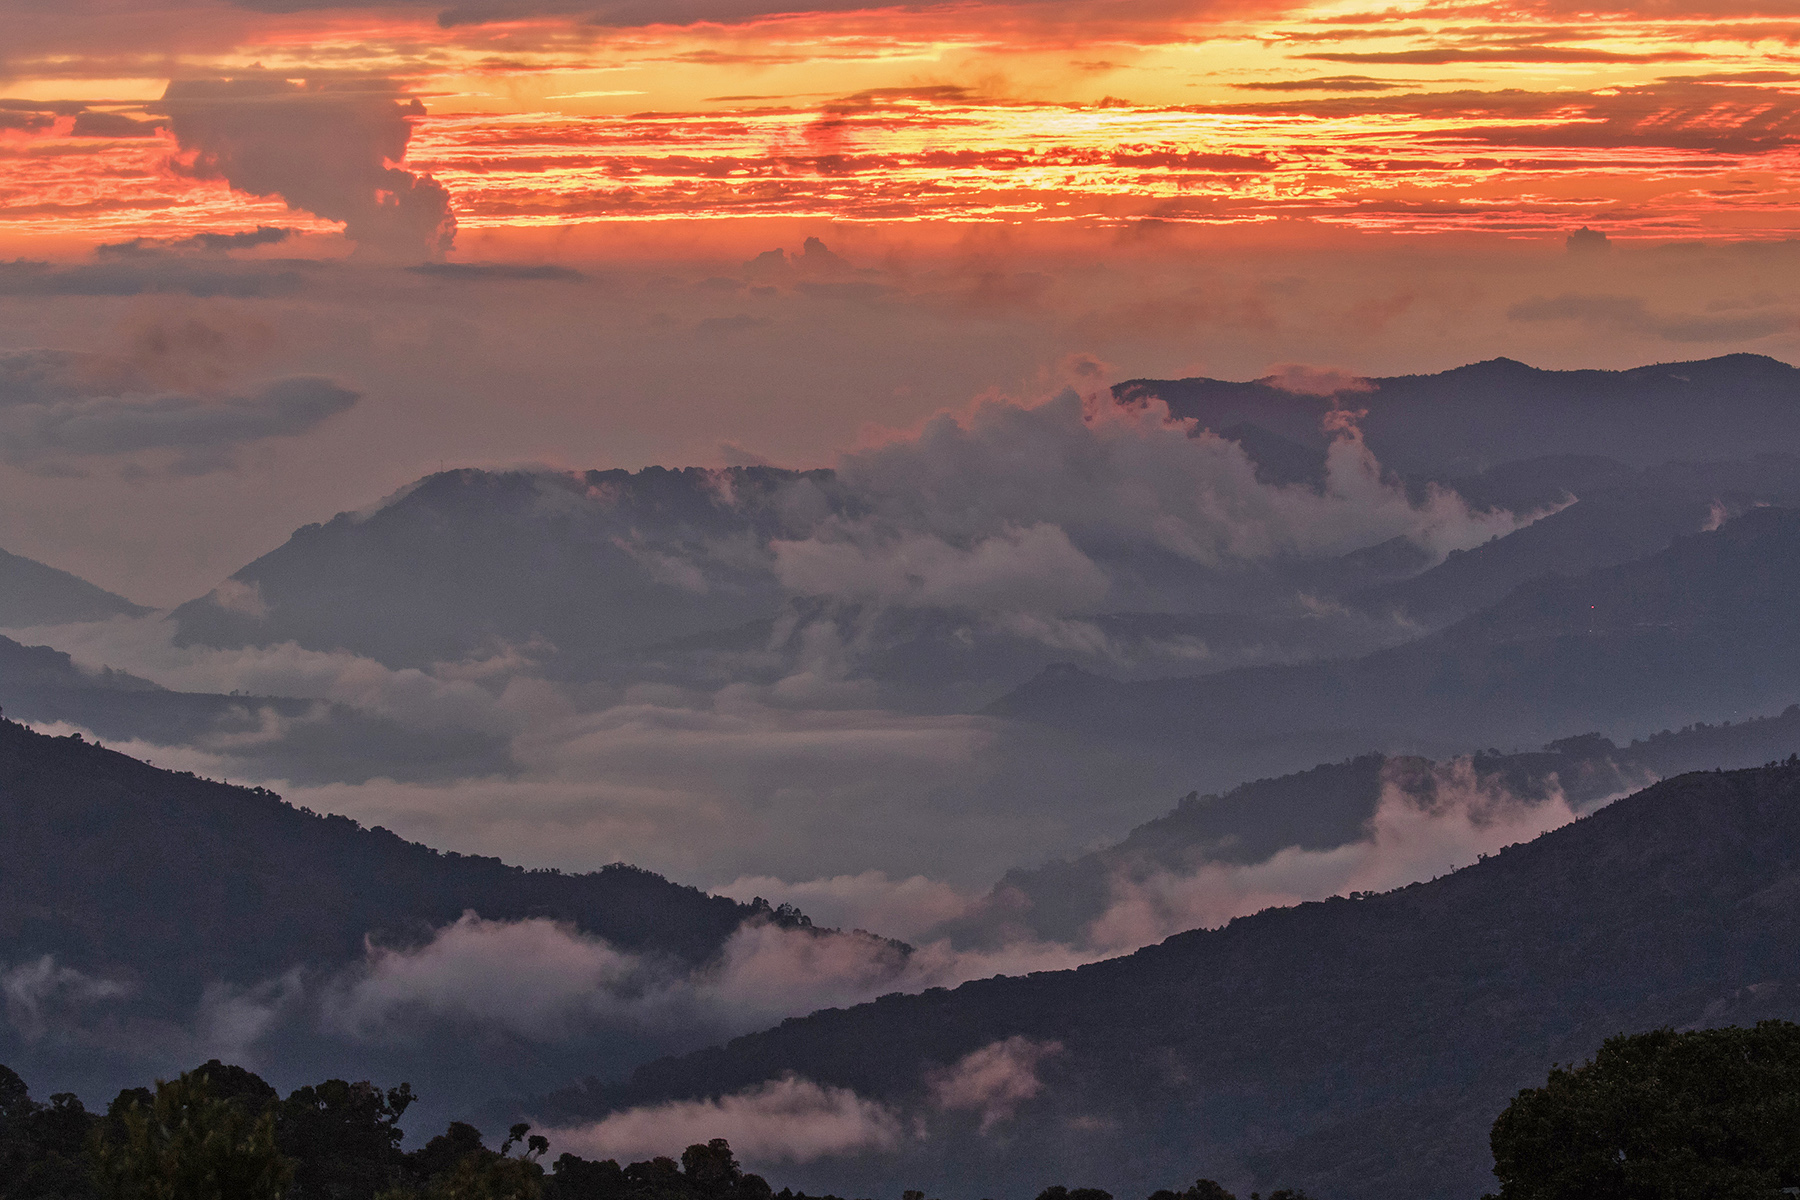 Cerro de la Muerte at sunset in Costa Rica (image by Pete Morris)